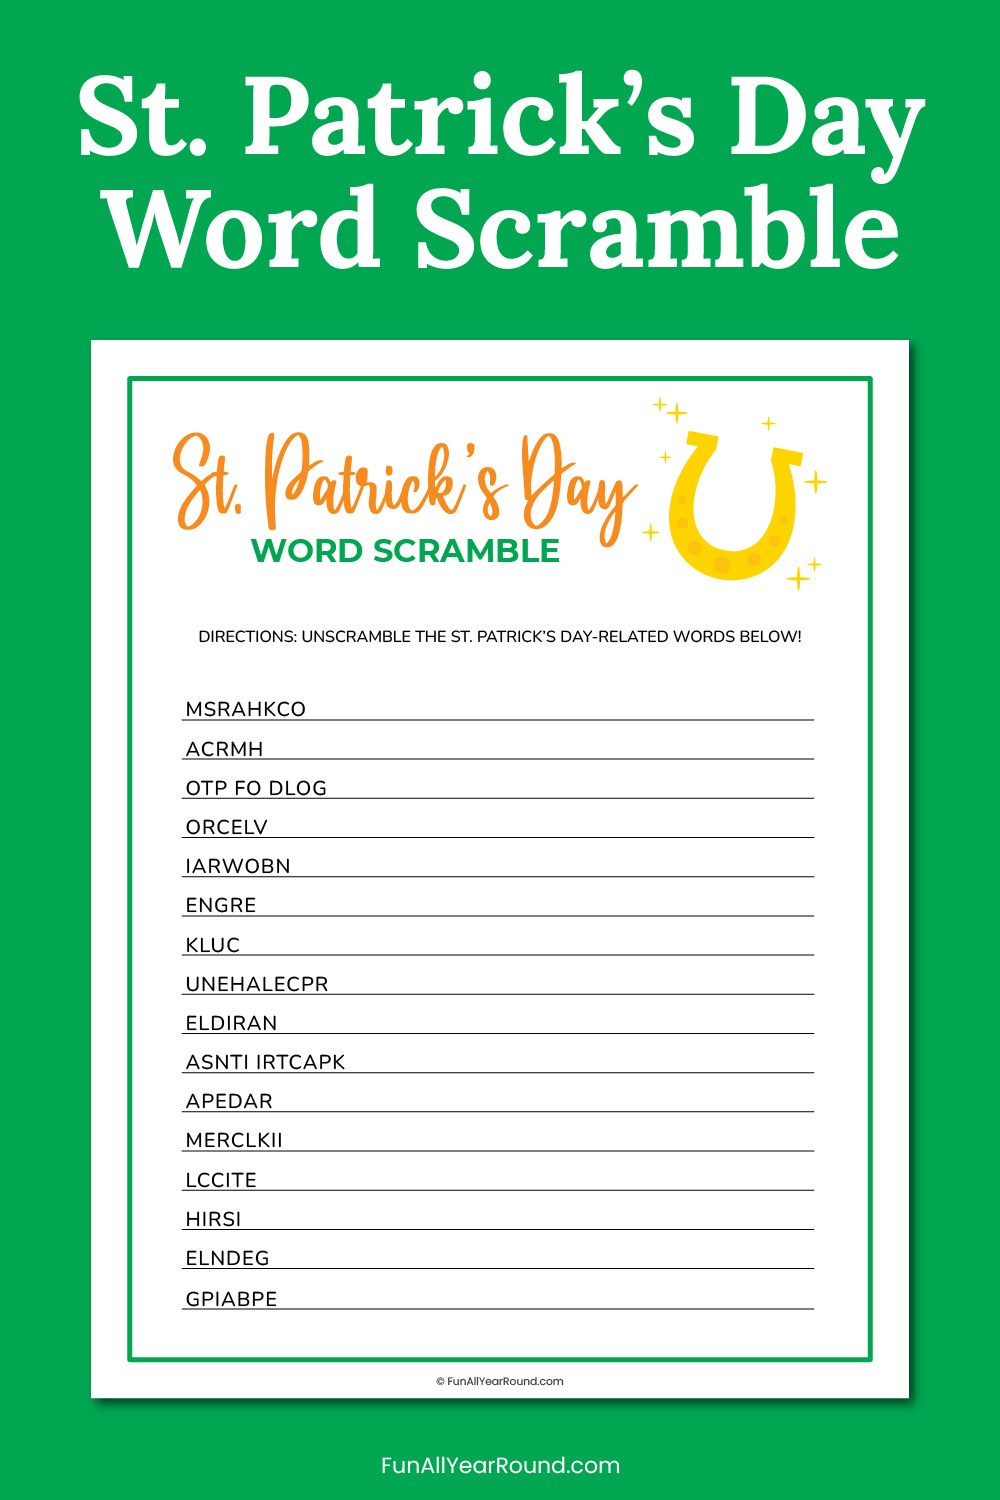 St. Patrick's Day word scramble